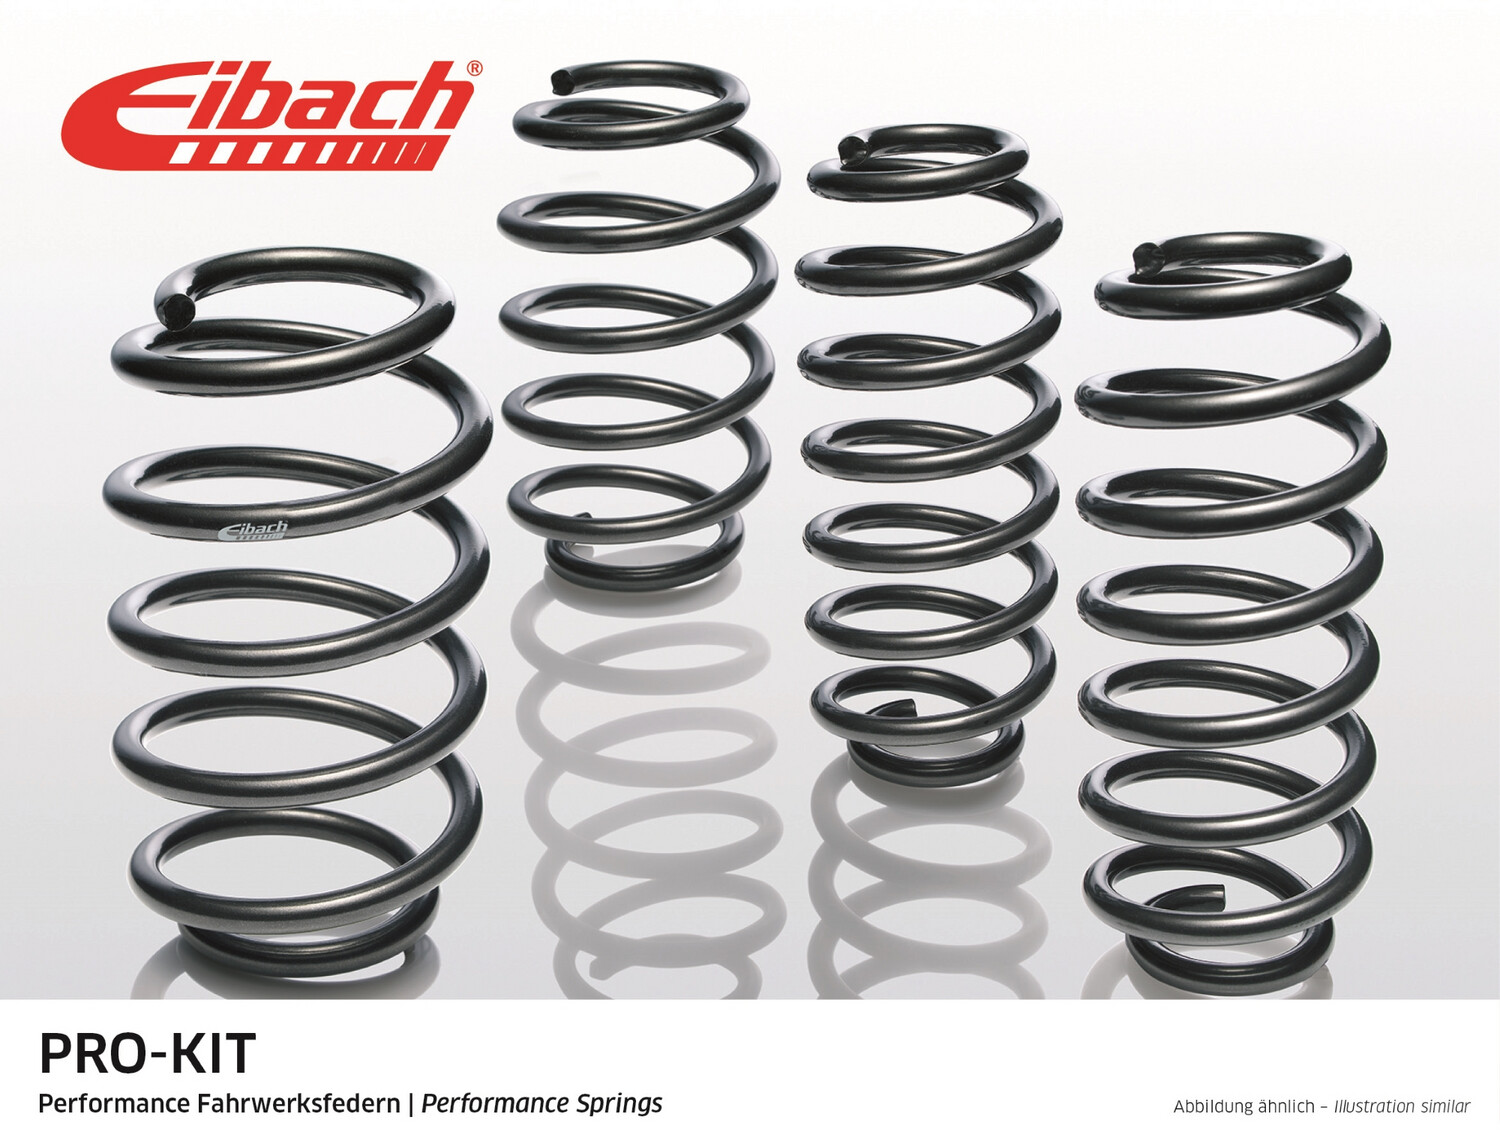 Mazda 3 BL Diesel (& 2ltr Petrol) - Eibach Pro-Kit Lowering Spring Kit